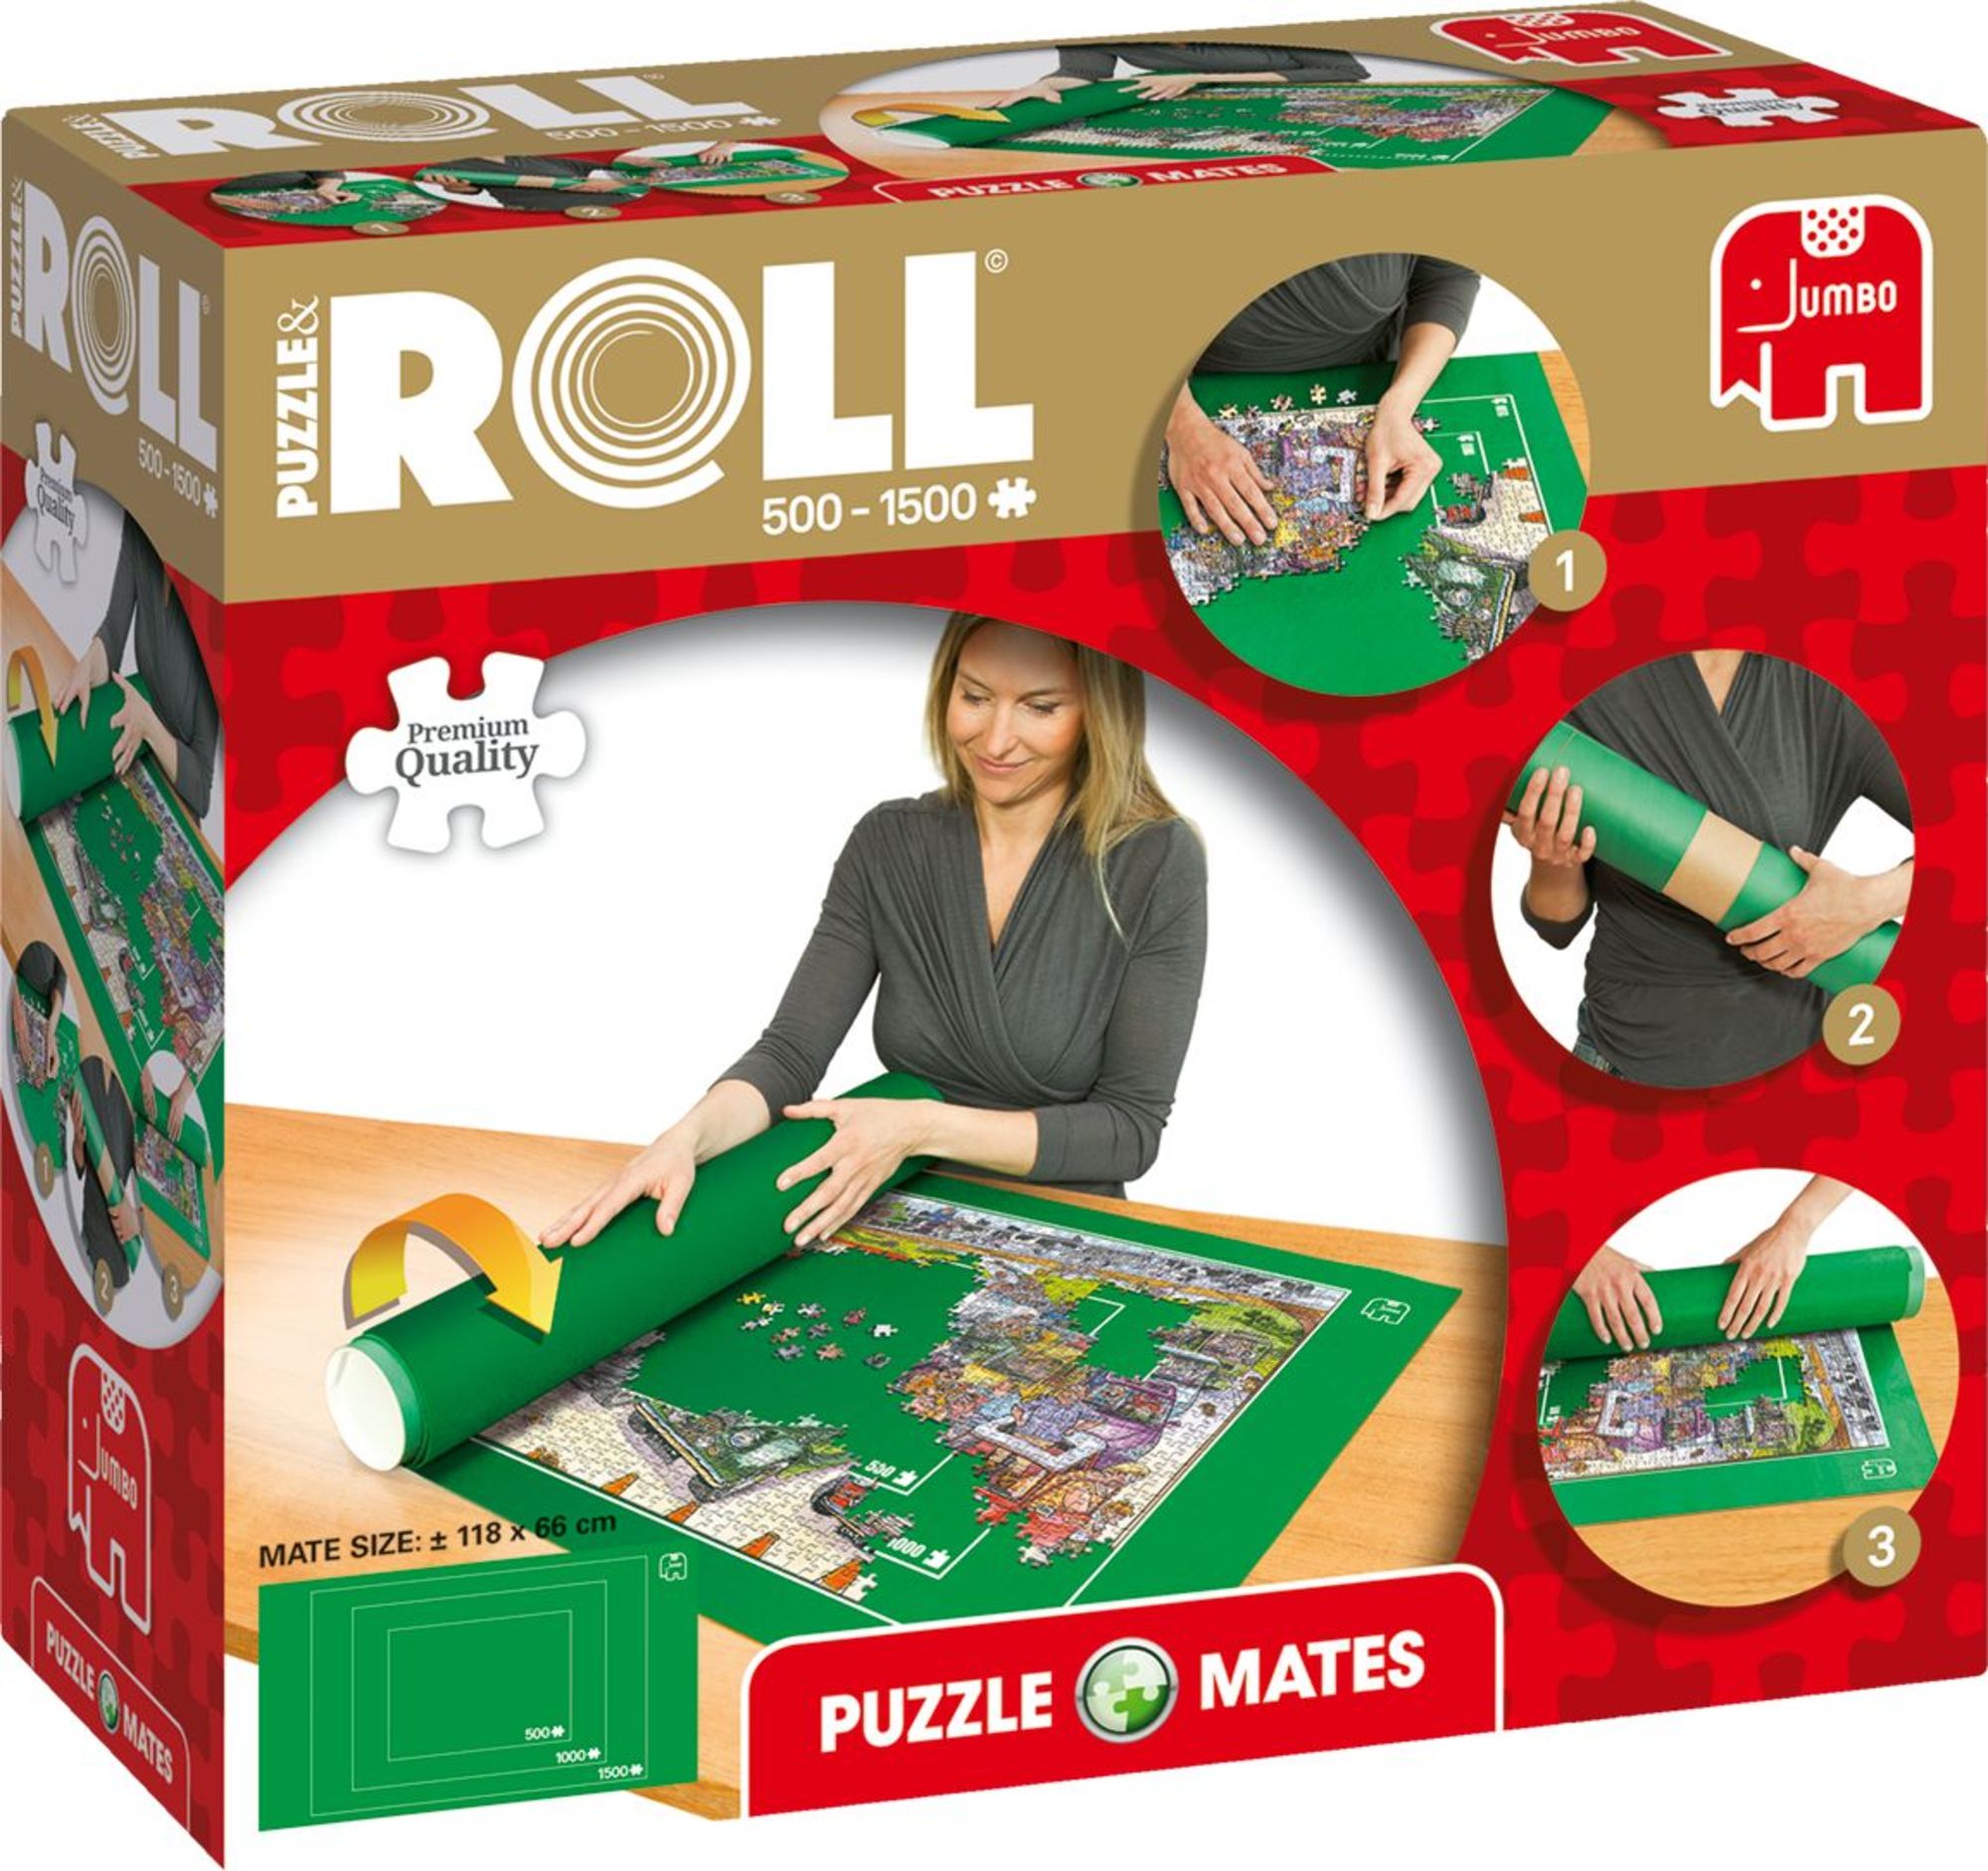 Puzzle Matte Jumbo Puzzle Mates and Roll 500 - 1500 Teile' kaufen -  Spielwaren